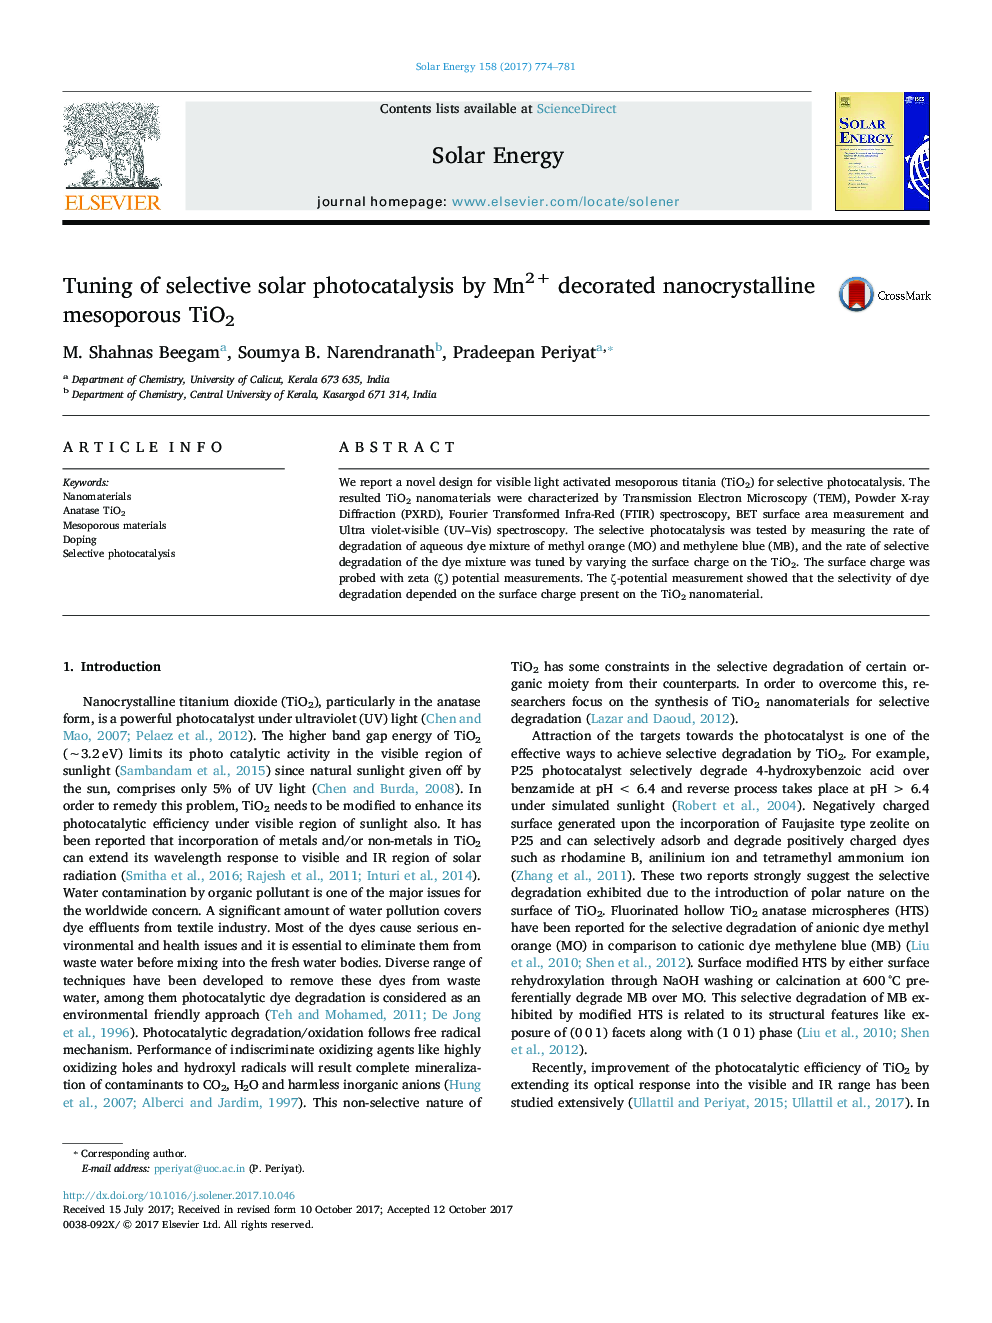 Tuning of selective solar photocatalysis by Mn2+ decorated nanocrystalline mesoporous TiO2